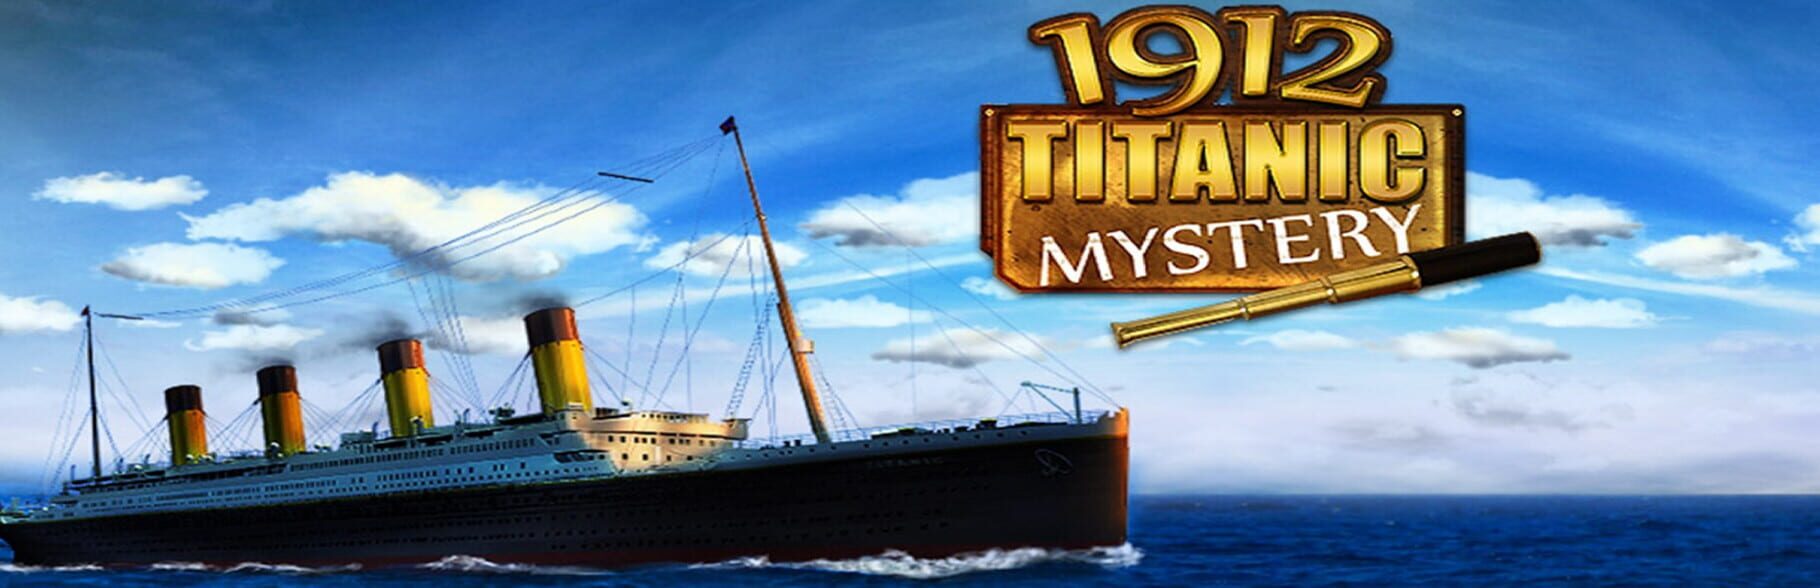 1912 Titanic Mystery artwork